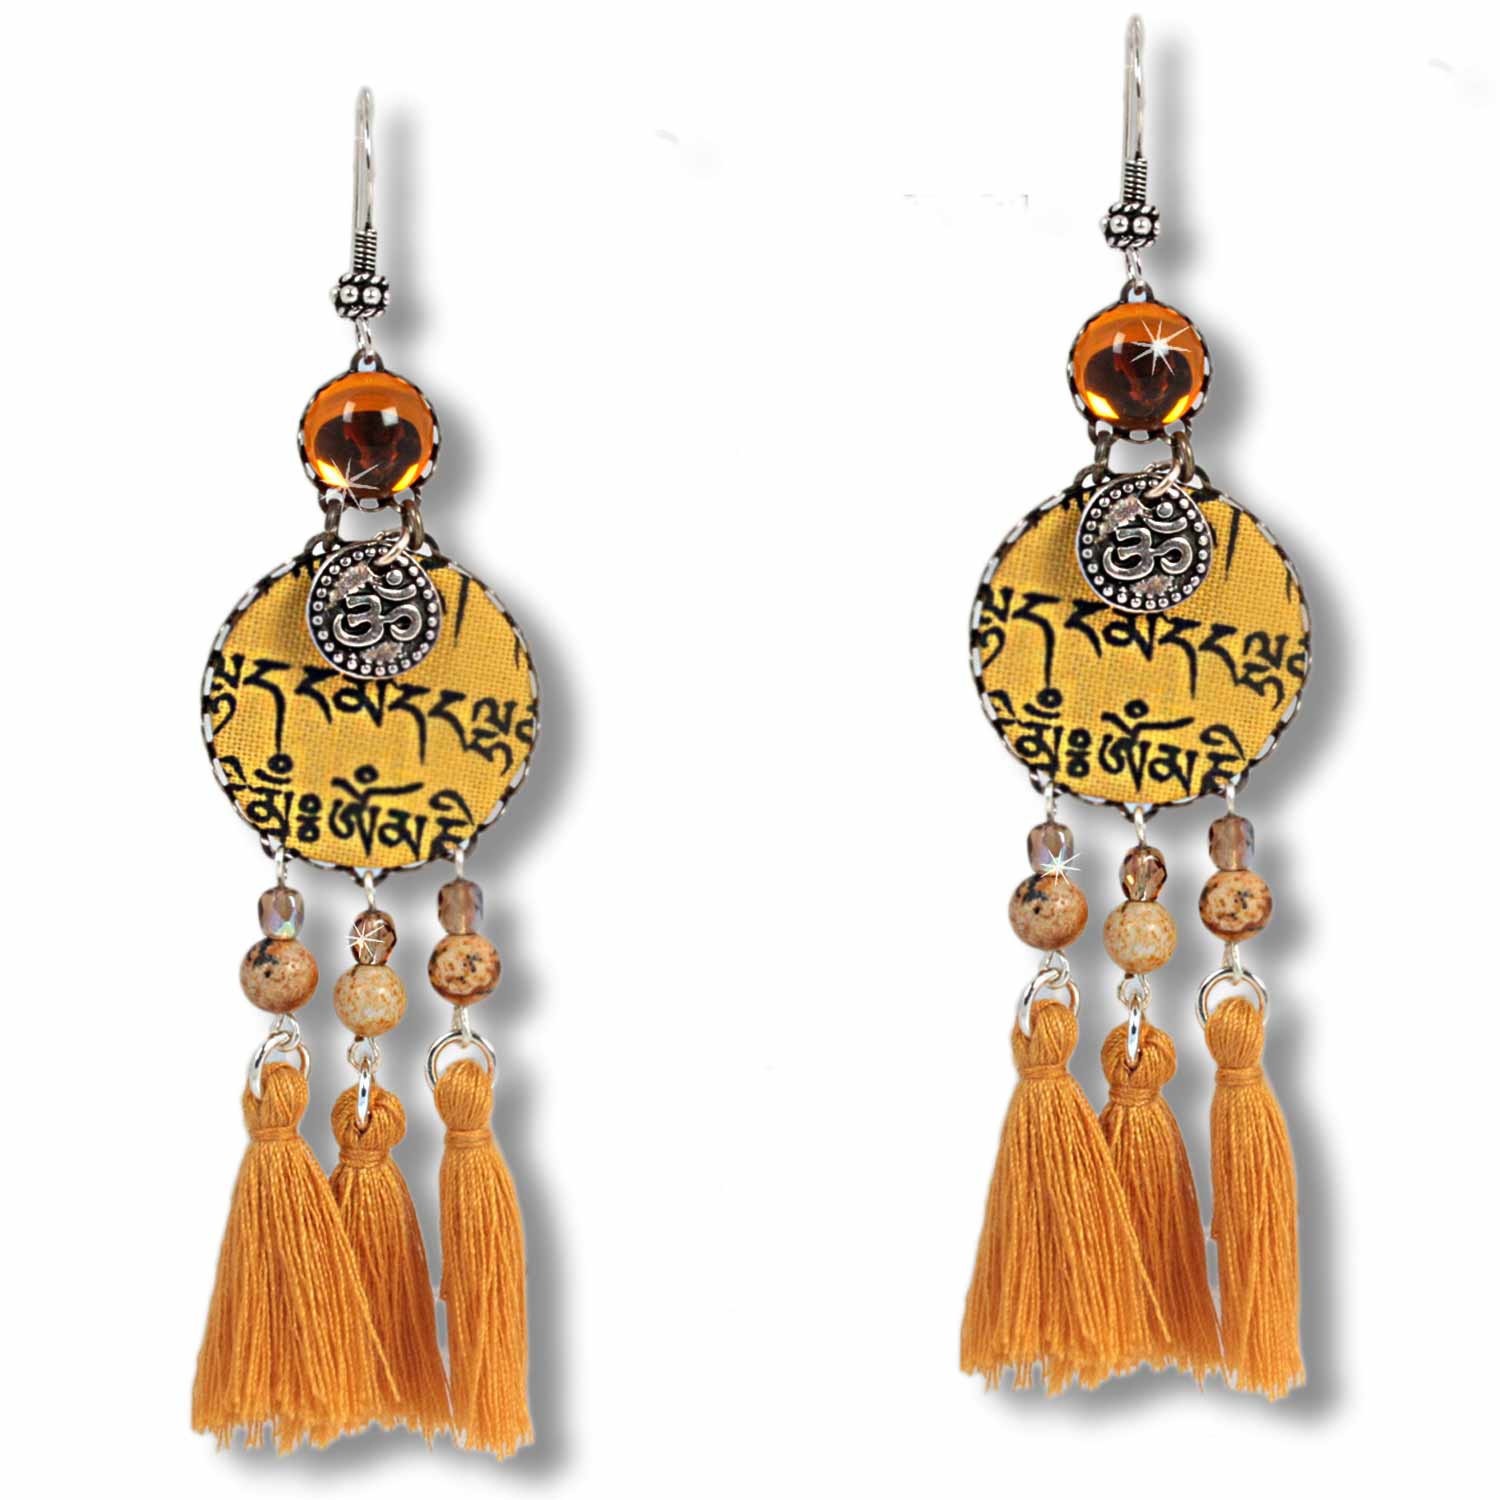 Earth Tashi - Tibetan Wish earrings with jasper